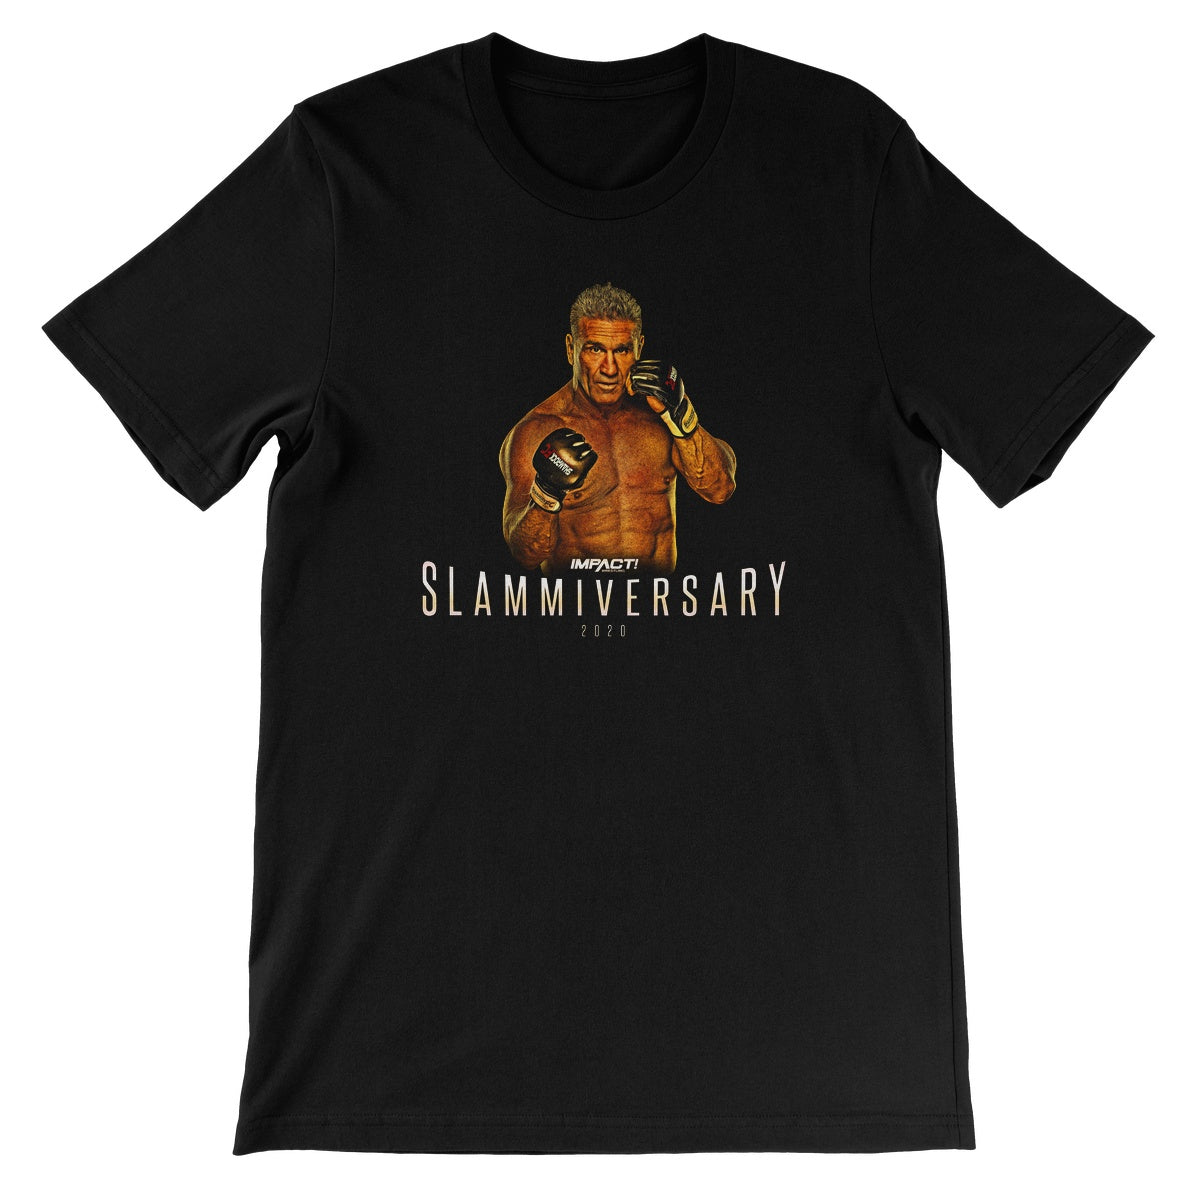 2020 Slammiversary Ken Shamrock Unisex Short Sleeve T-Shirt